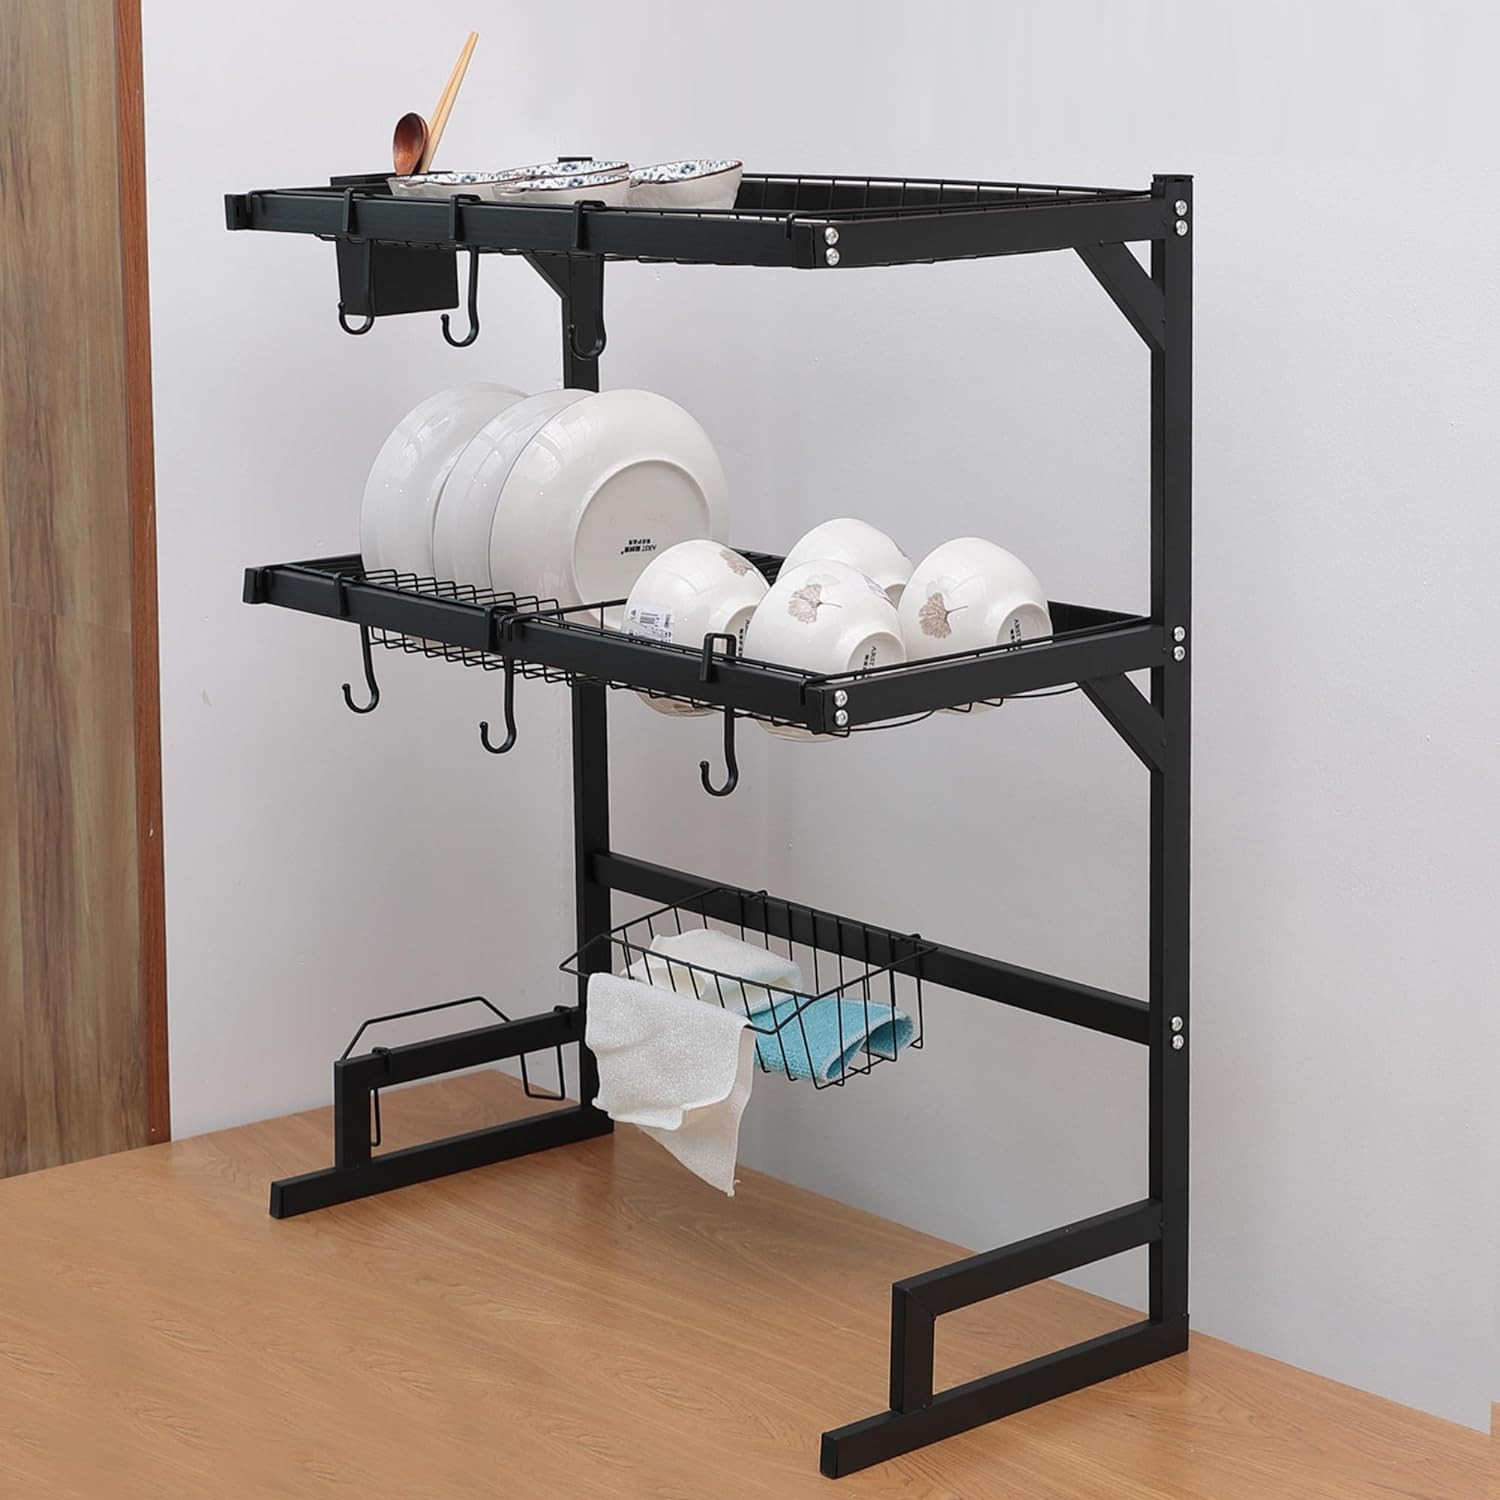 Kuber Industries 2-Layer Dish Drying Rack|Storage Rack for Kitchen Counter|Drainboard & Cutting Board Holder|Premium Utensils Basket (Black)